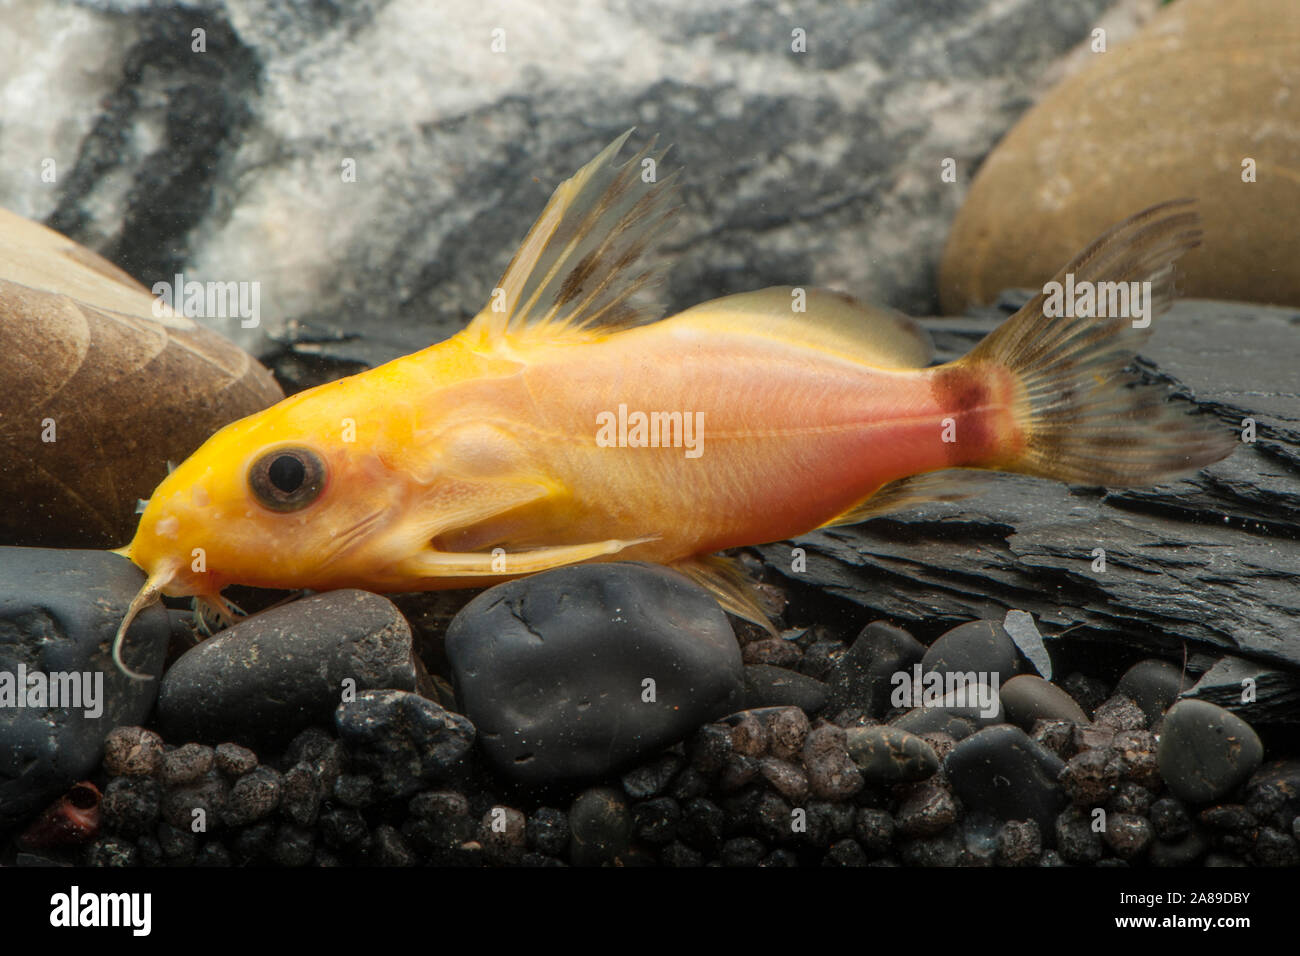 Synodontis nigrita Gold,Rueckenschwimmer Kongowels,Nigerian upside down catfish Stock Photo